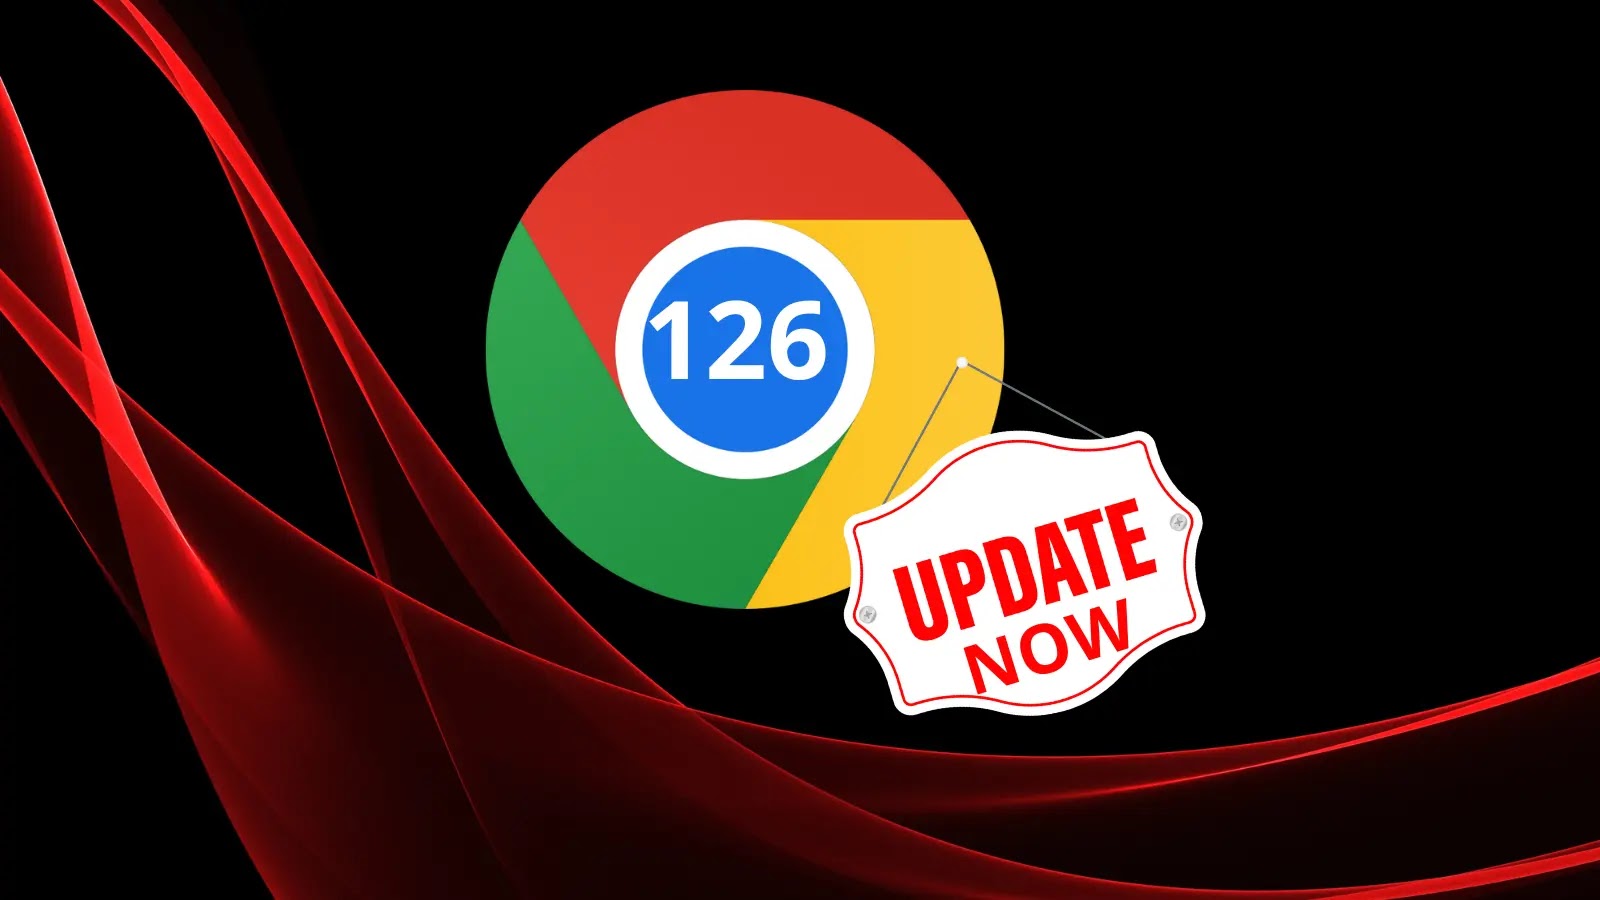 Chrome 126 Updates Patch High-Severity Vulnerabilities